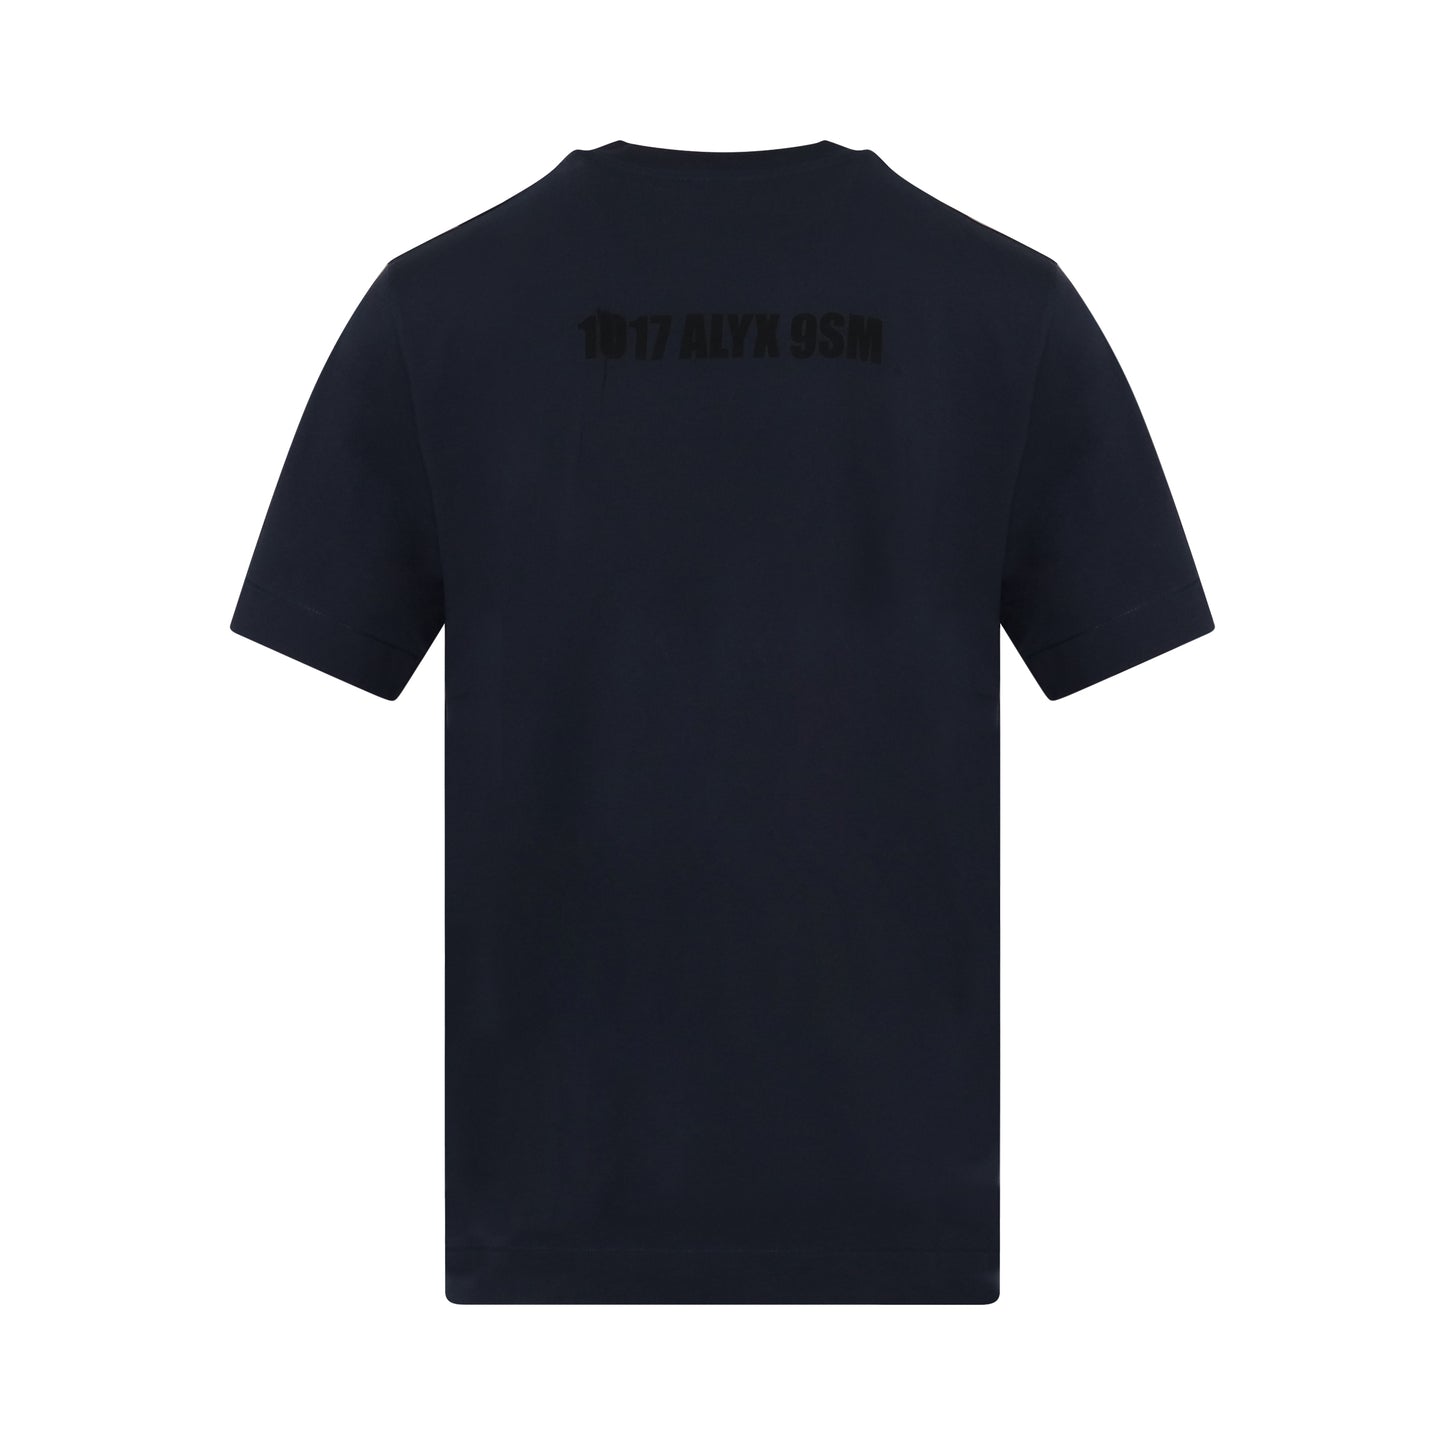 Mirrored Logo T-Shirt in Navy